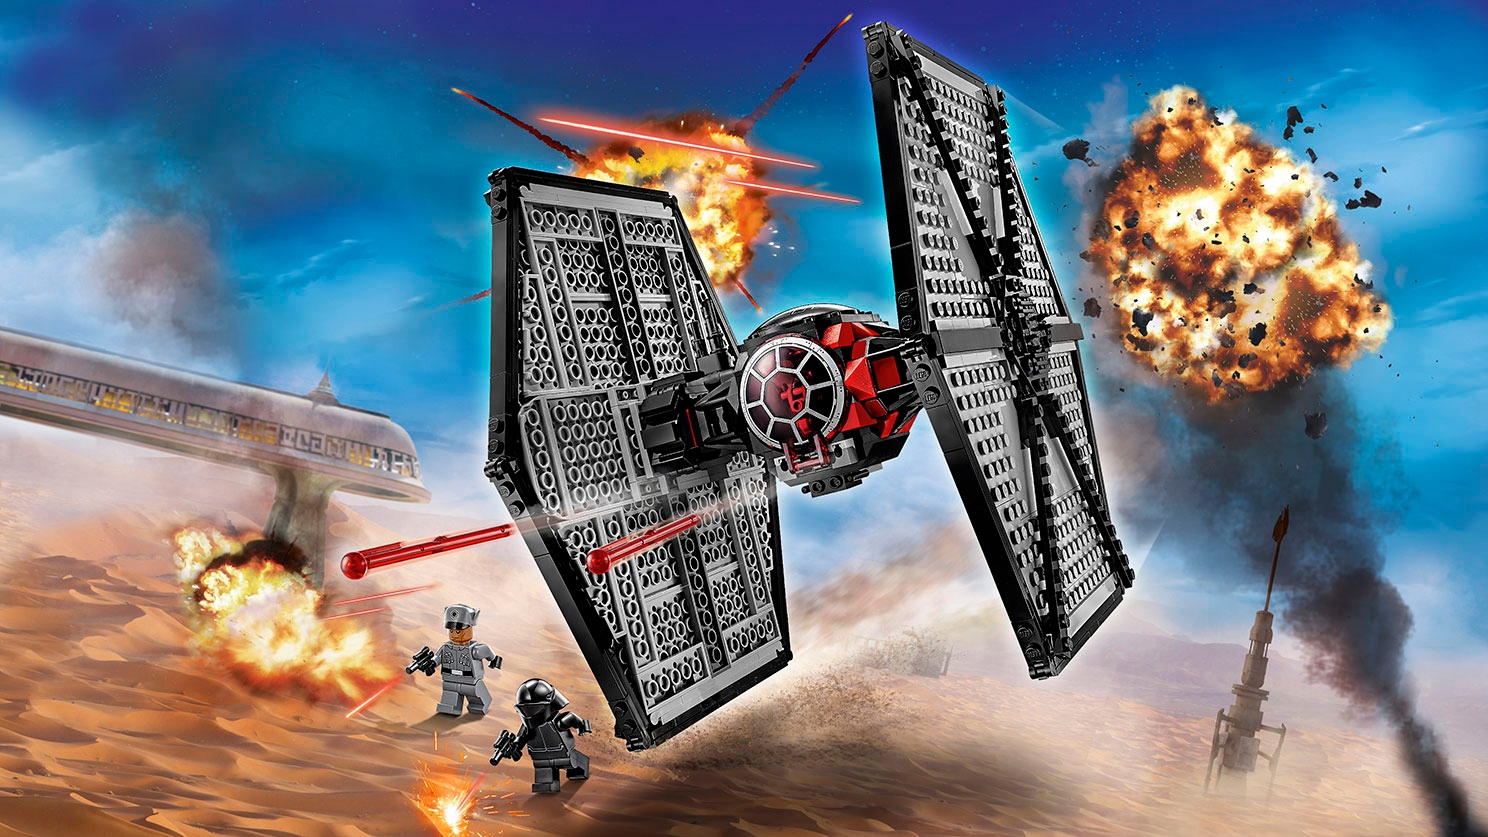 LEGO STAR WARS FIRST ORDER SPECIAL LEGO 75101 